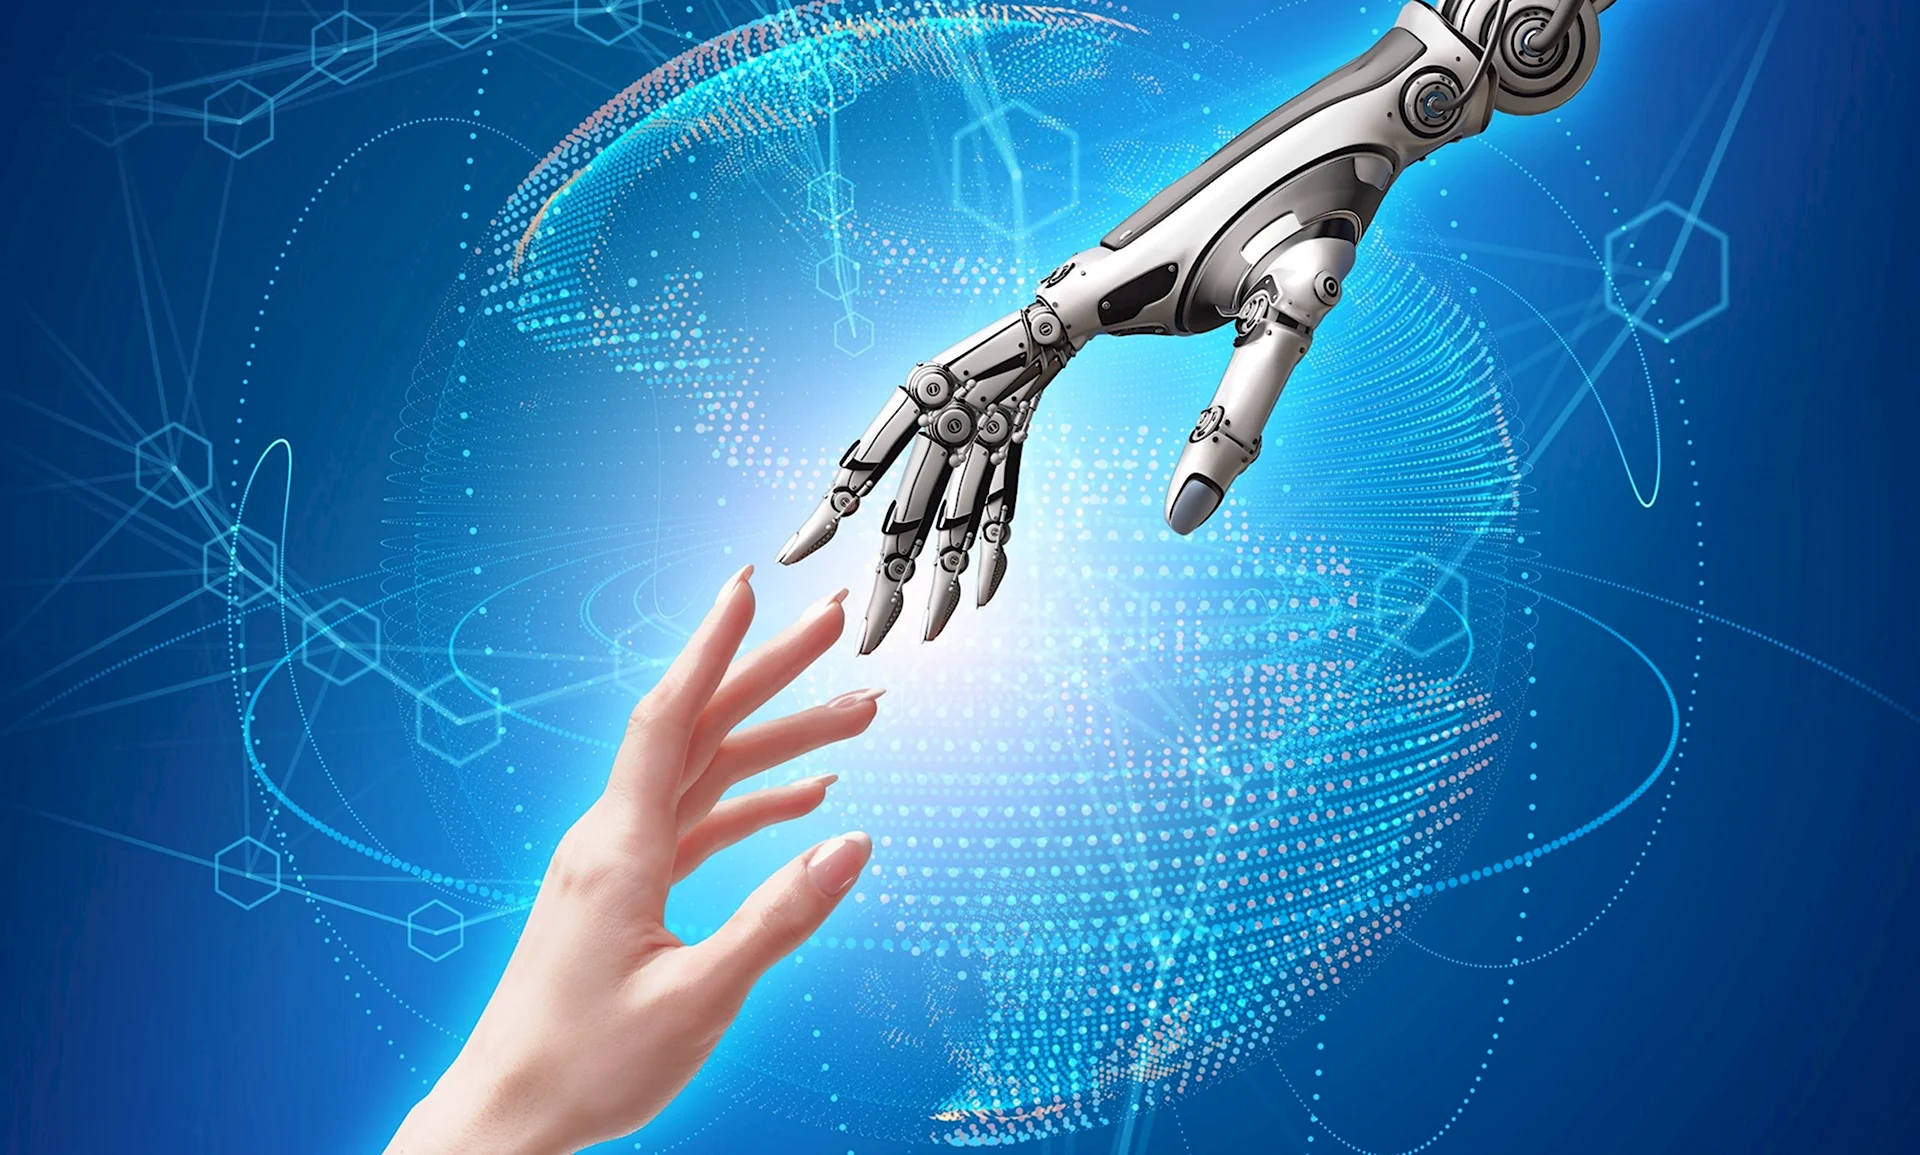 Рука робота и рука человека